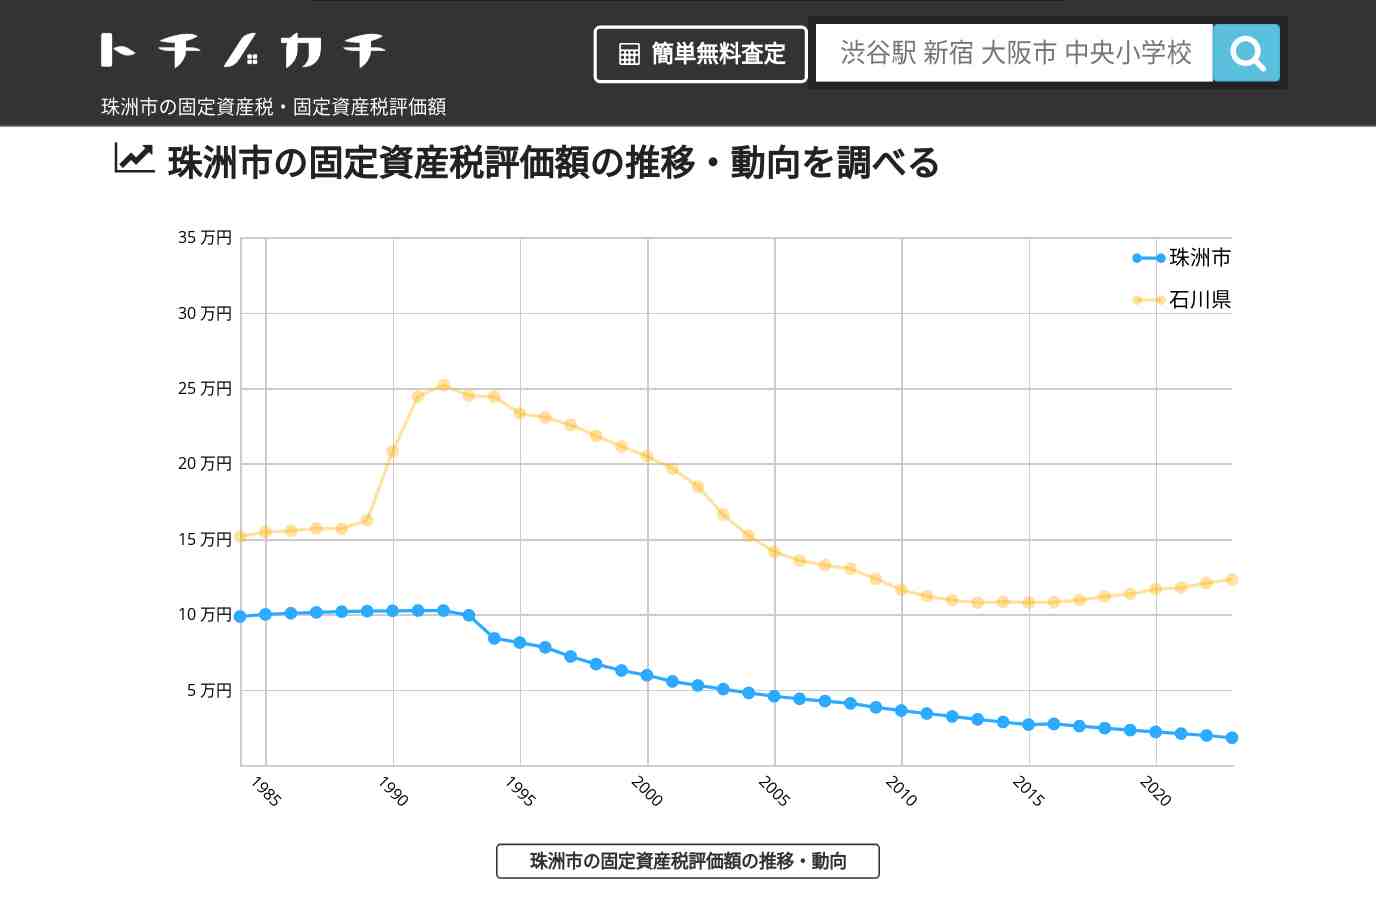 若山小学校(石川県 珠洲市)周辺の固定資産税・固定資産税評価額 | トチノカチ